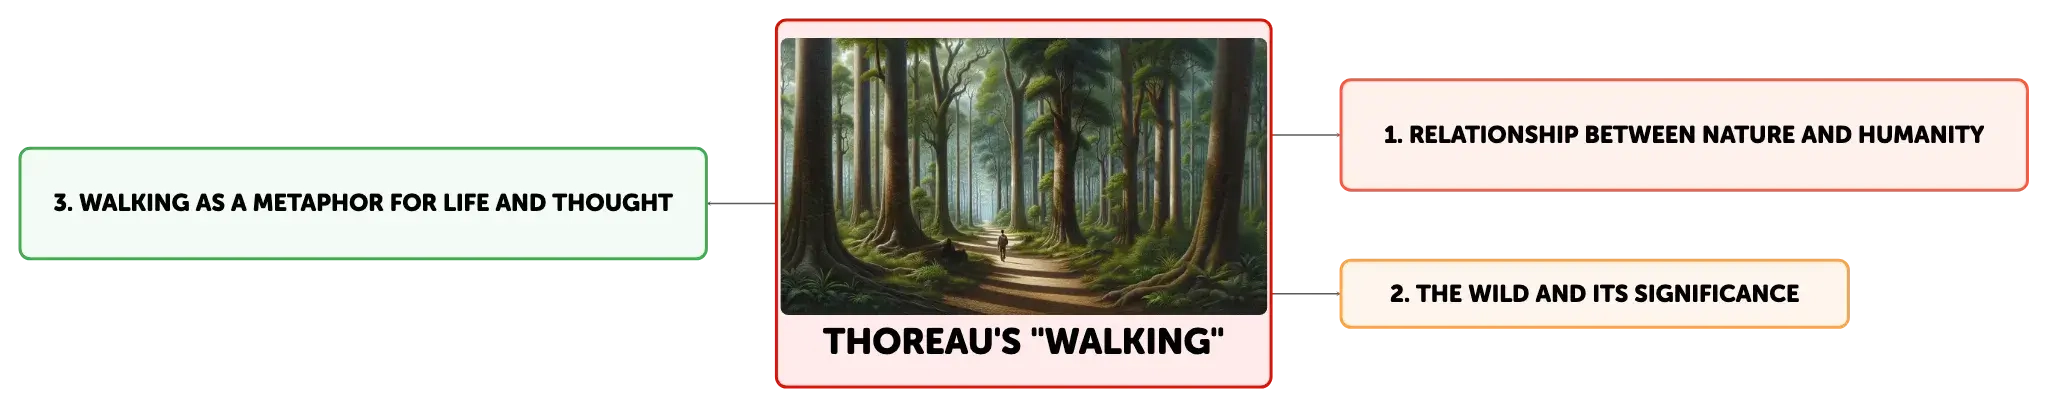 thoreau walking rhetorical analysis essay